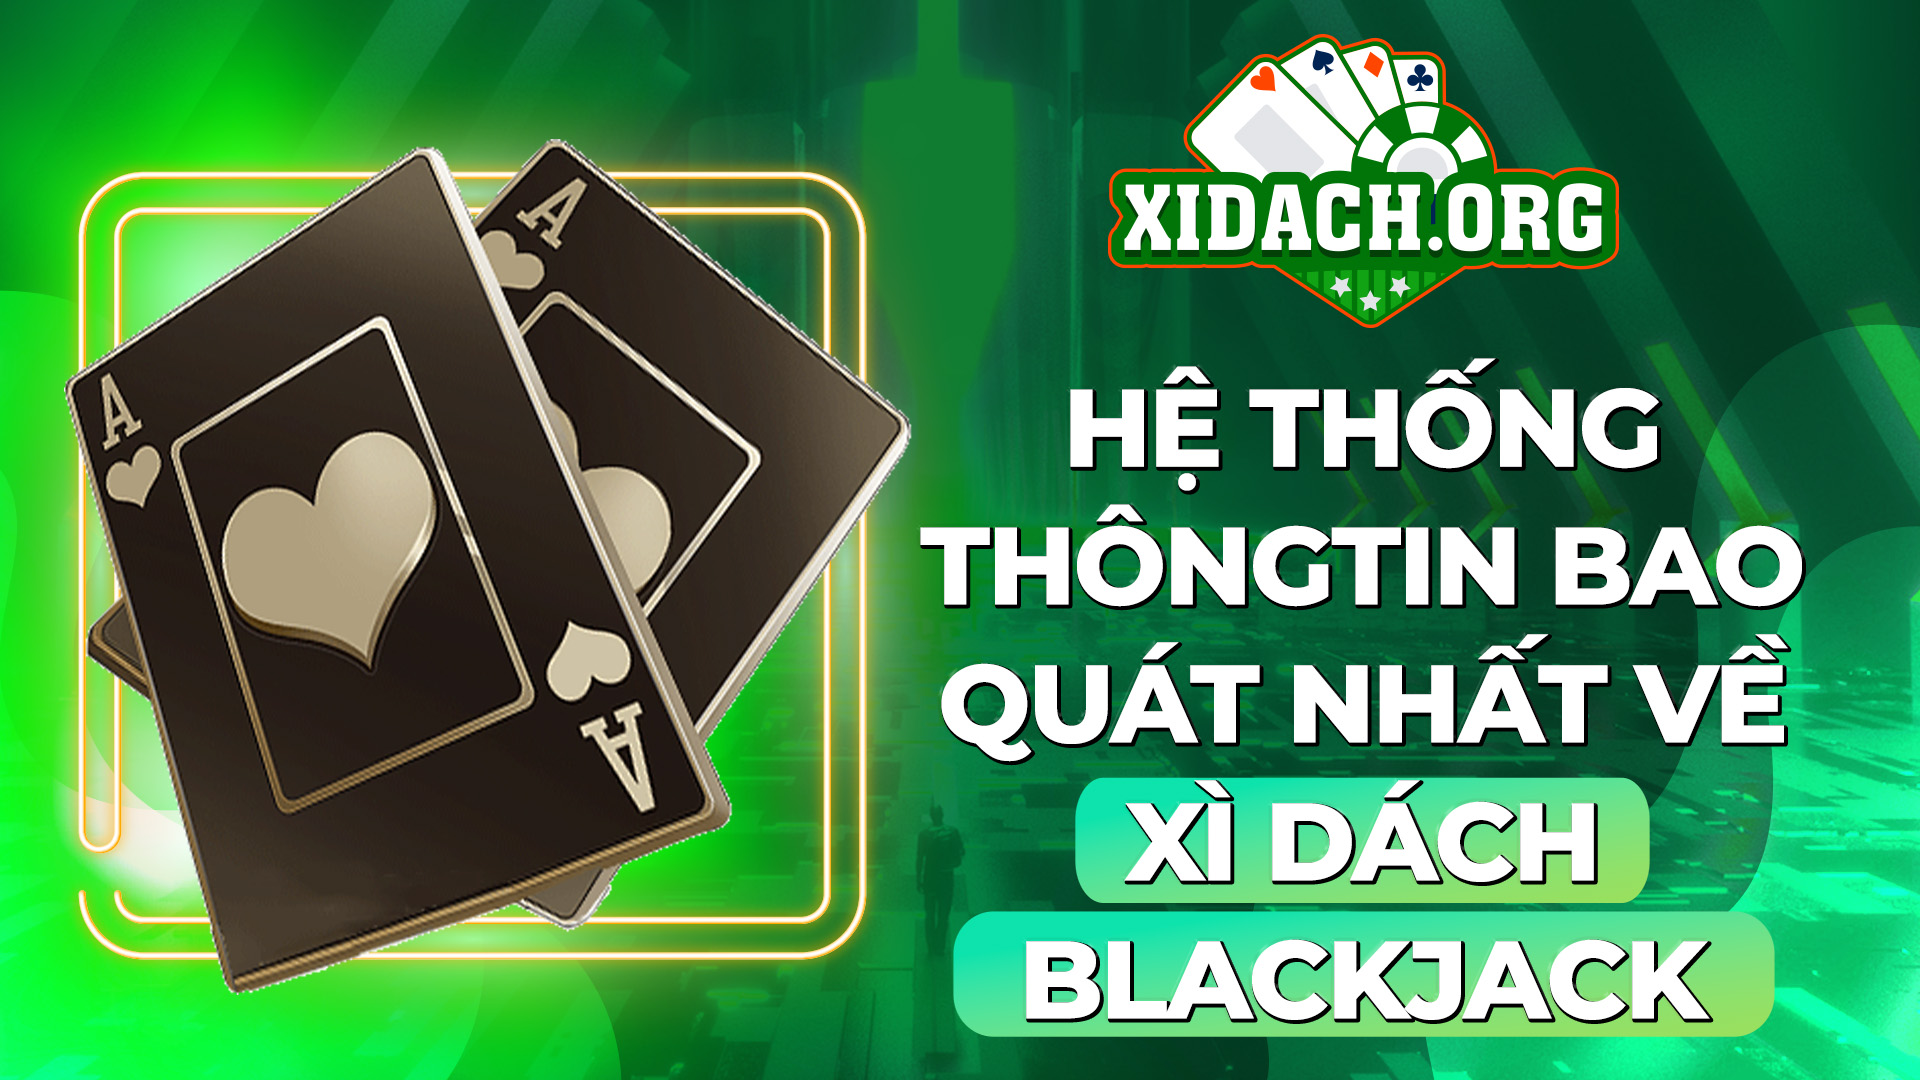 884 He Thong Thong Tin Bao Quat Nhat Ve Xi Dach Blackjack